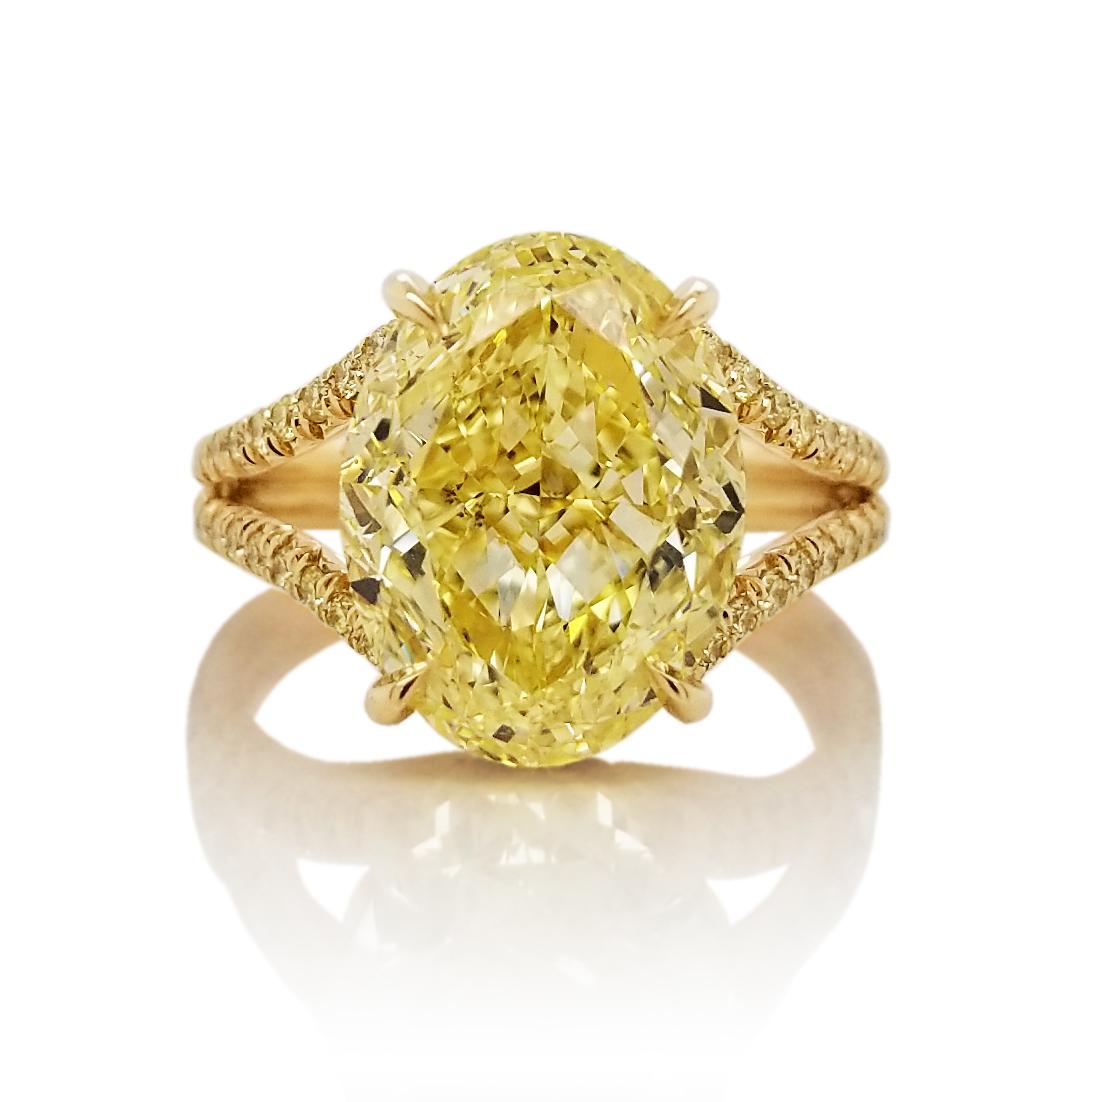 Scarselli 18 Karat Gold Ring 6 Carat Fancy Intense Yellow Oval Cut Diamond For Sale 1